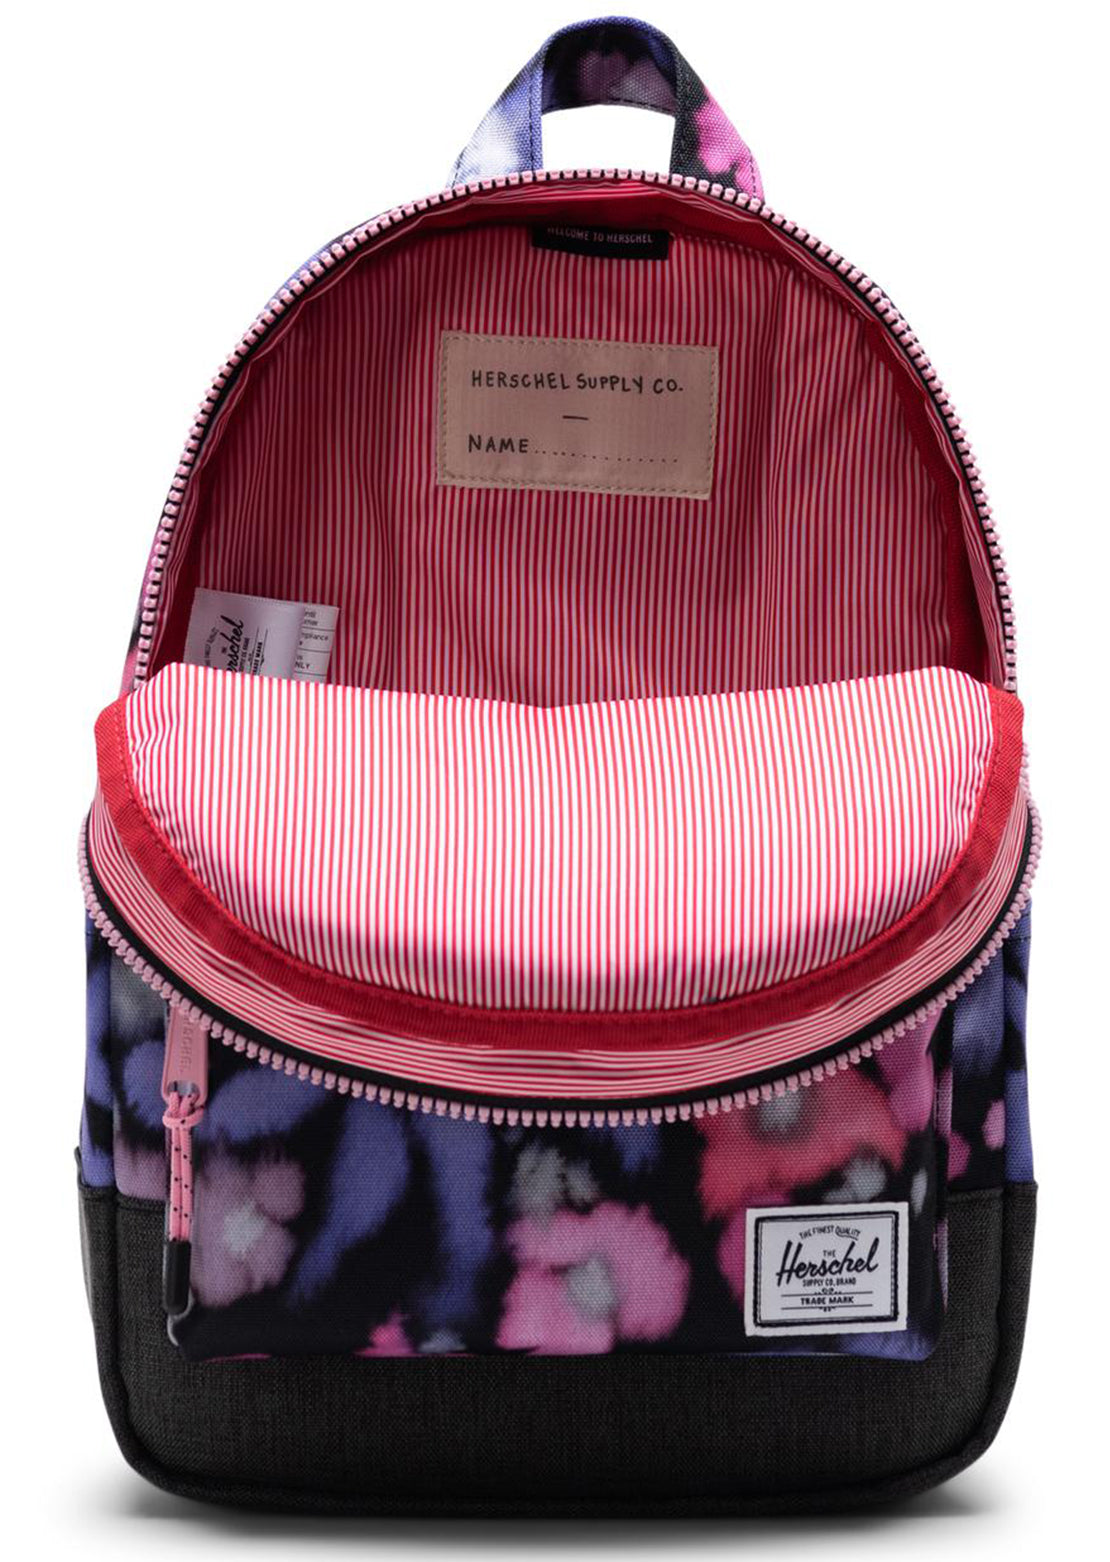 Herschel Junior Heritage Backpack Blurry Floral/Black Crosshatch